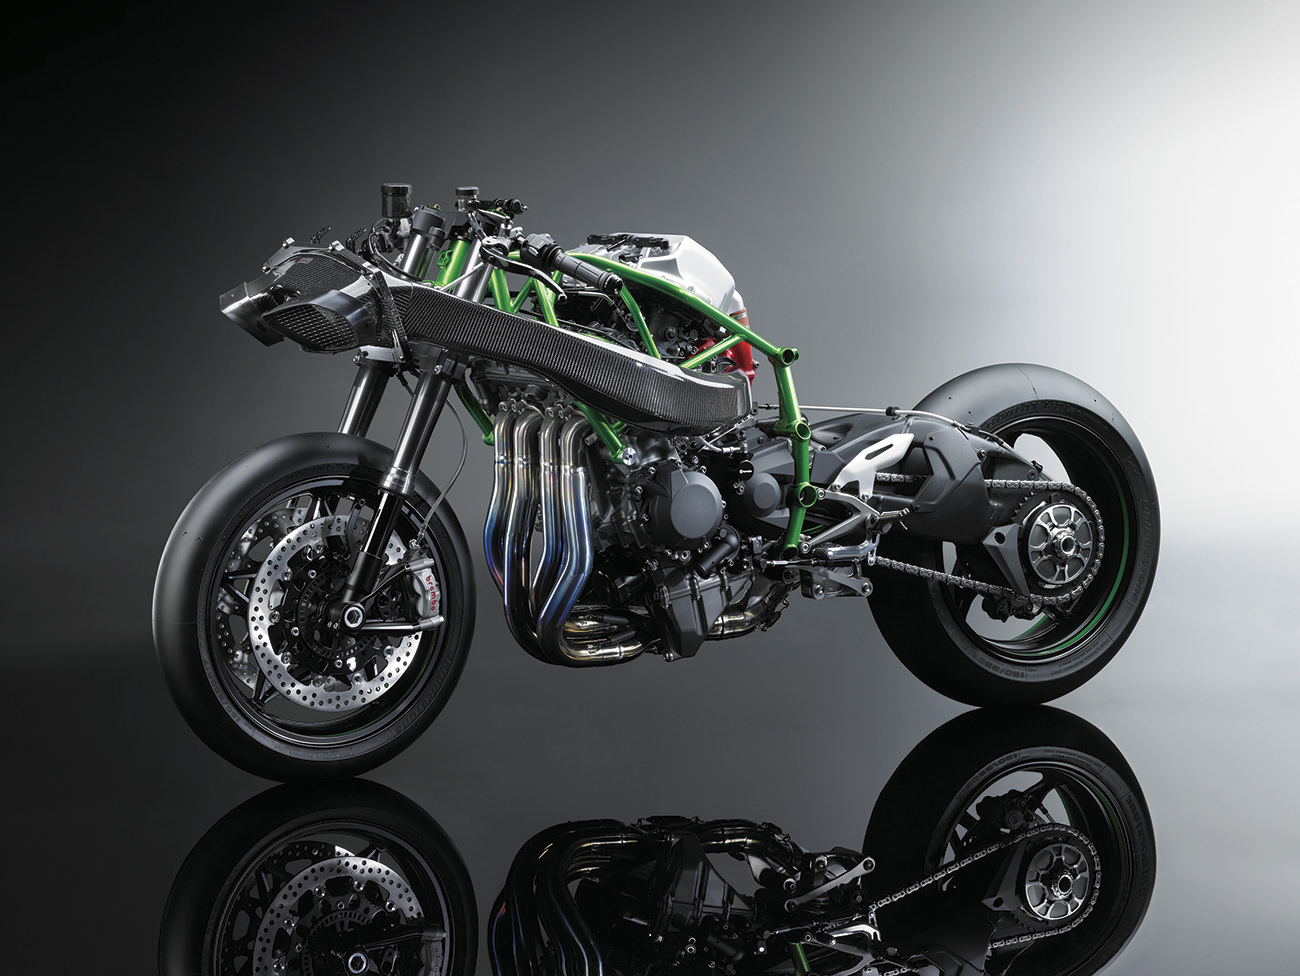 The Ninja H2R By Kawasaki: A Supercharged Hyperbike